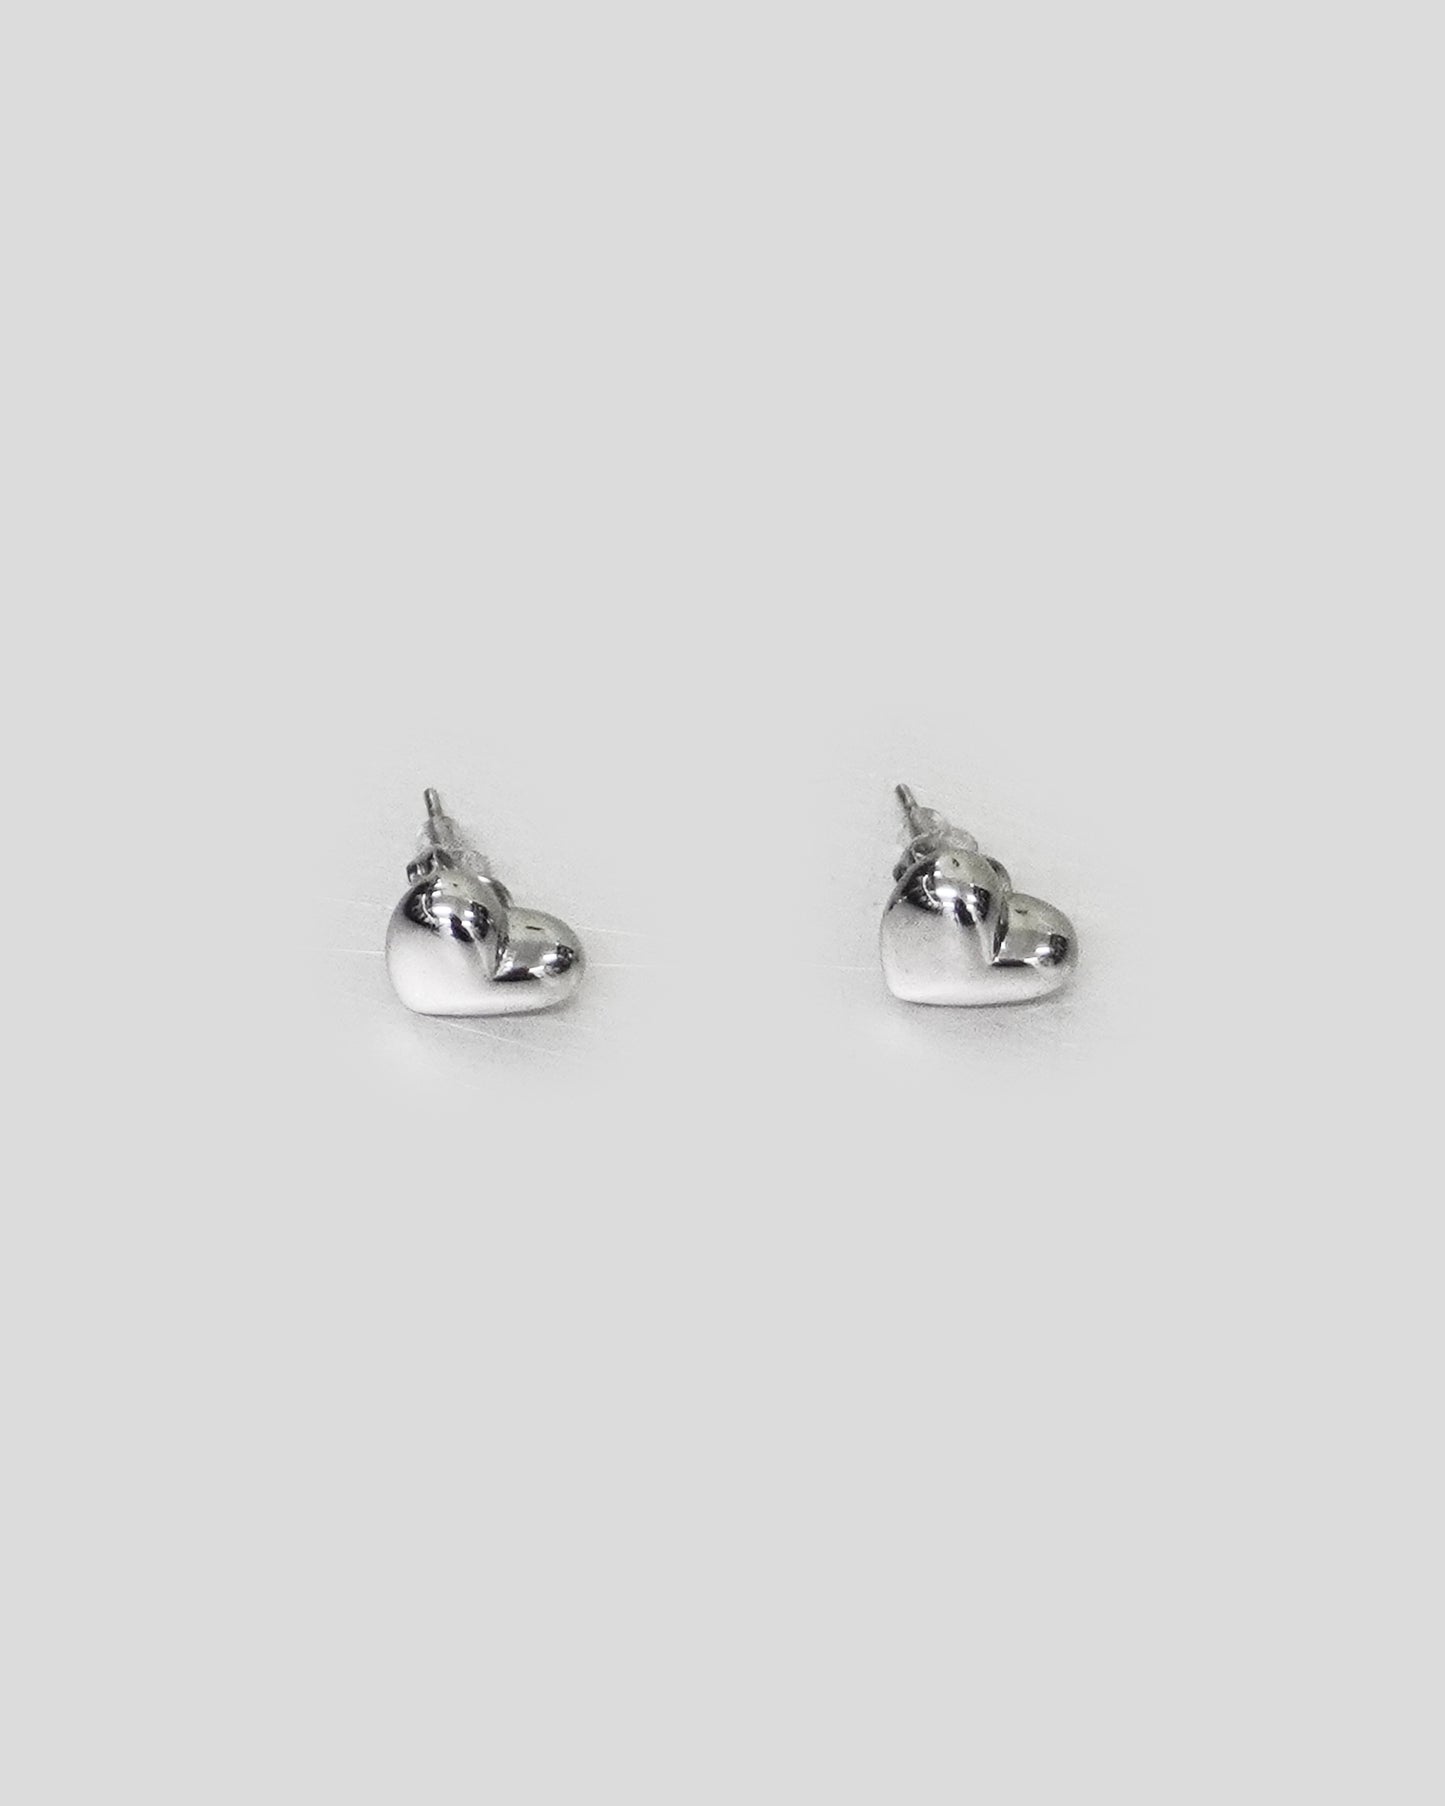 Pair of Silver Heart Earrings